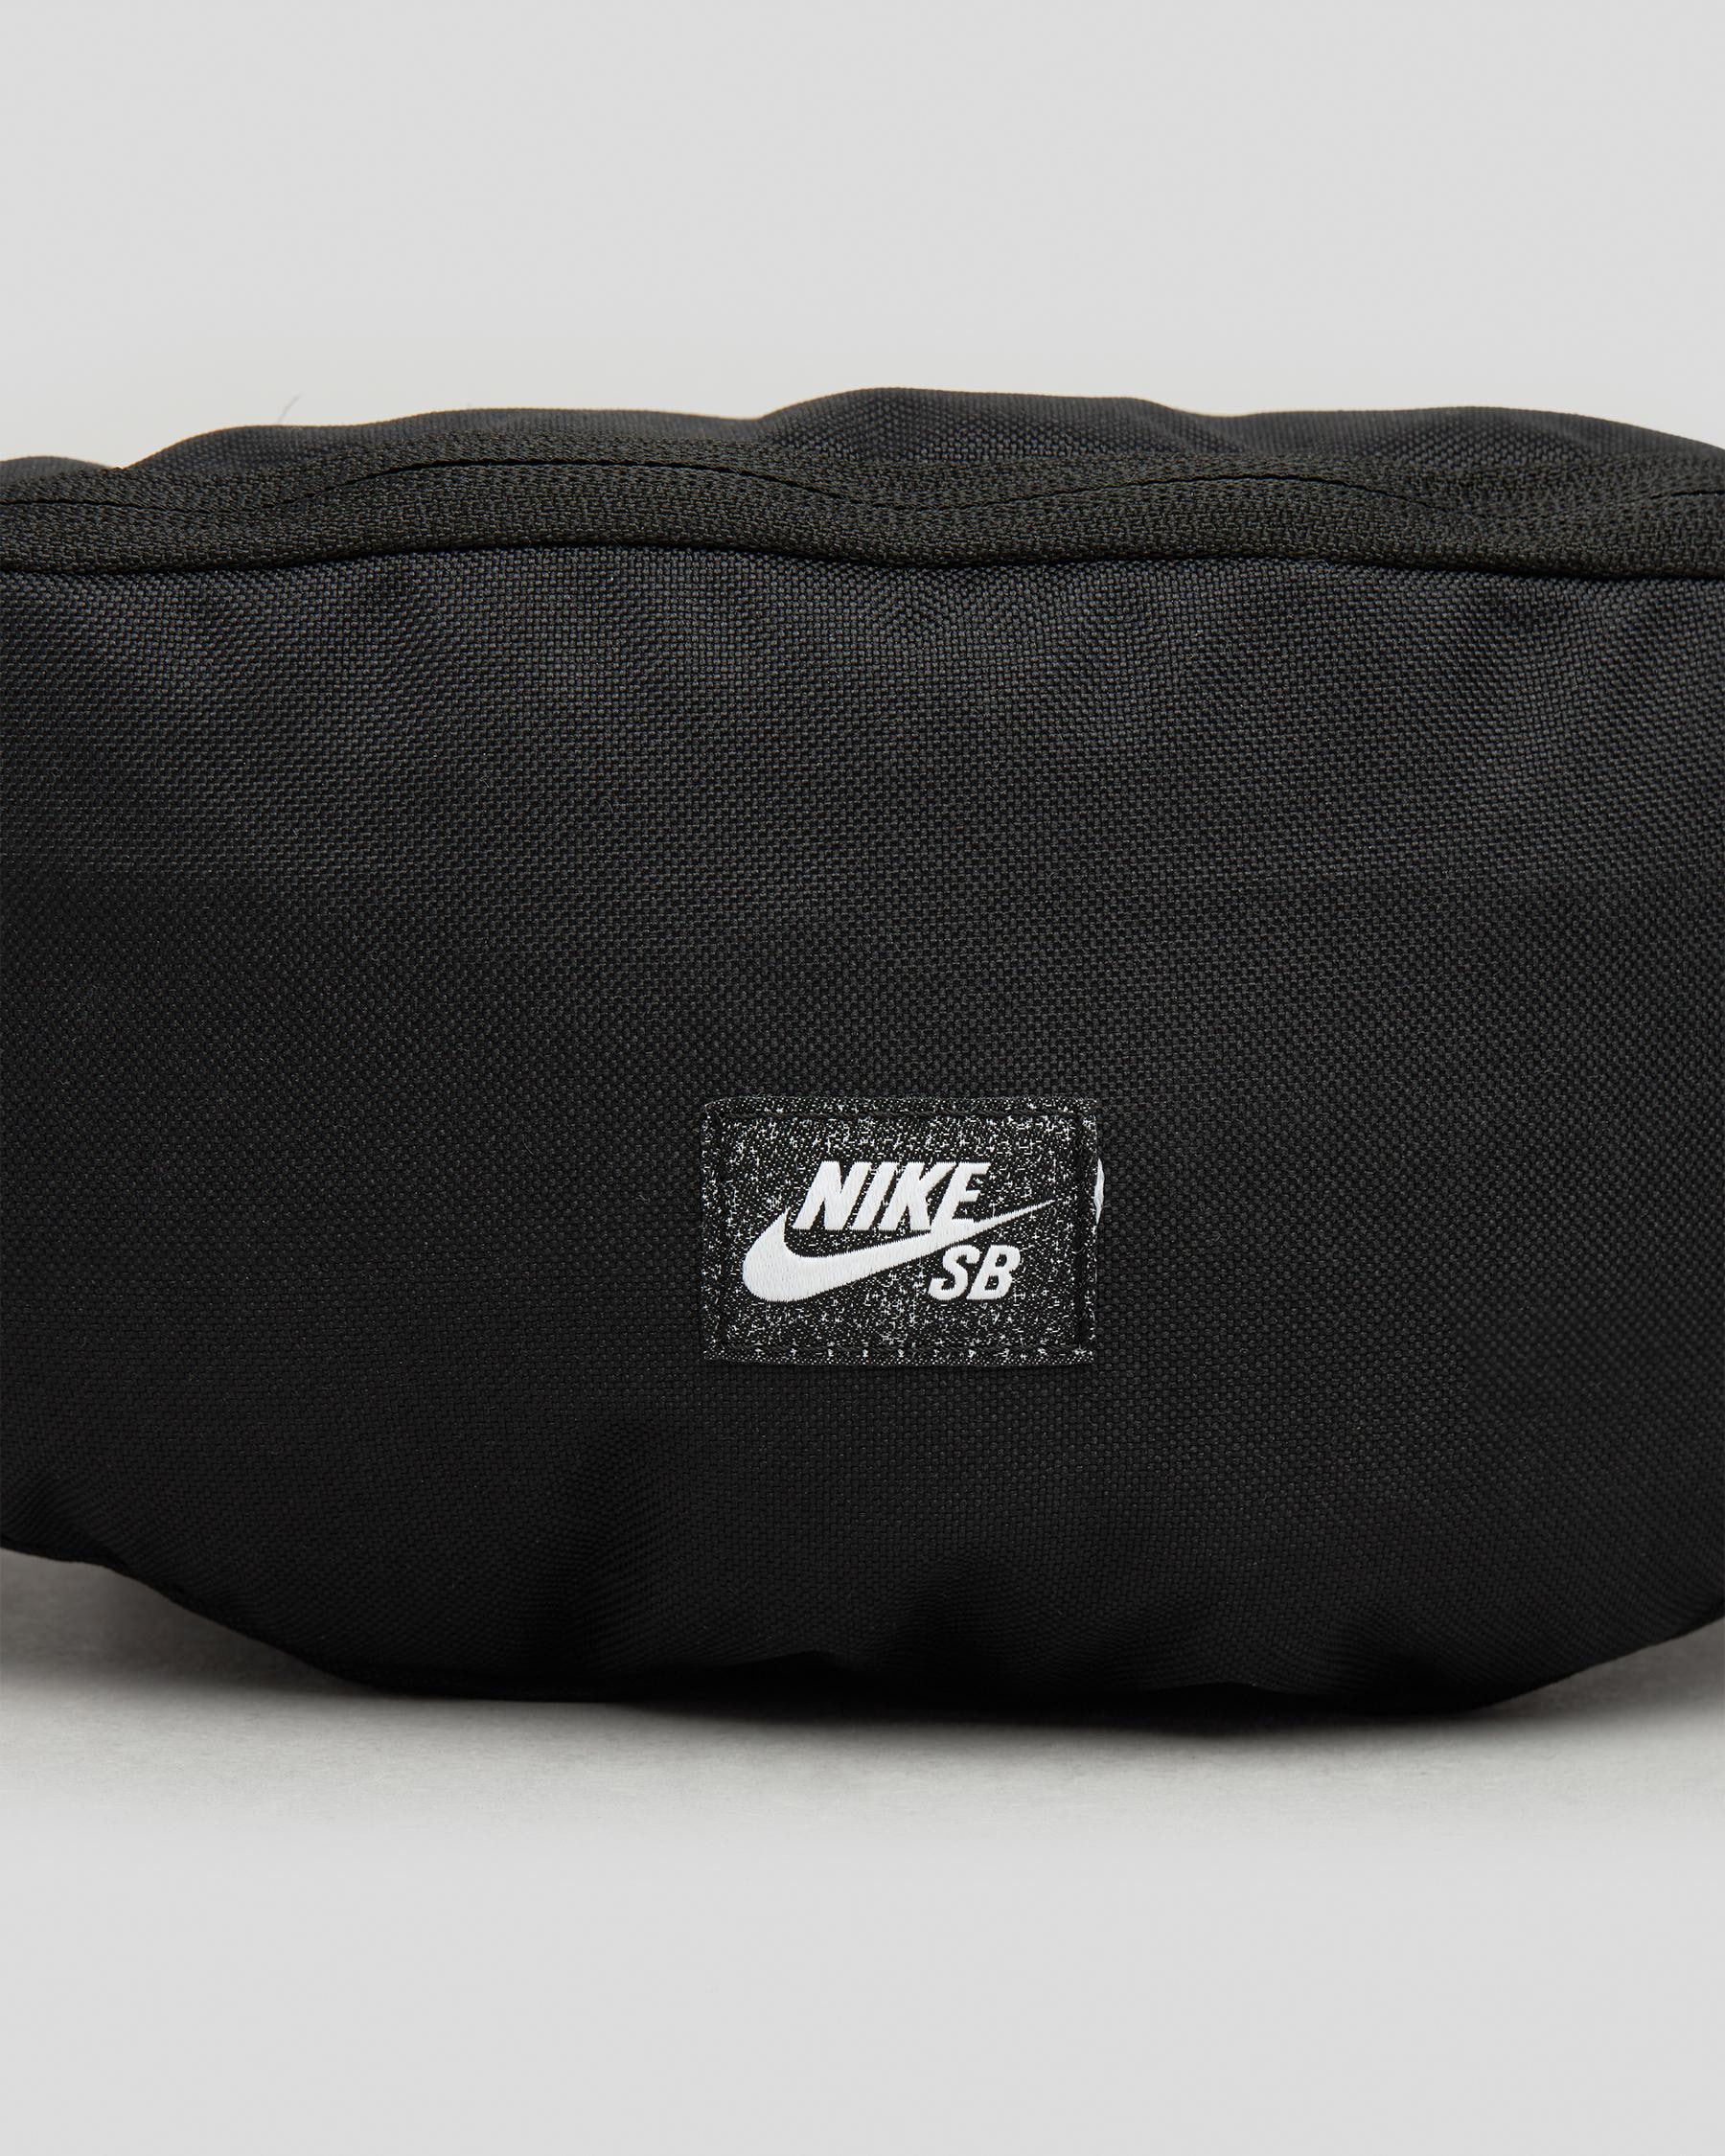 Nike SB Heritage Bag - Black/Black/White – Exodus Ride Shop